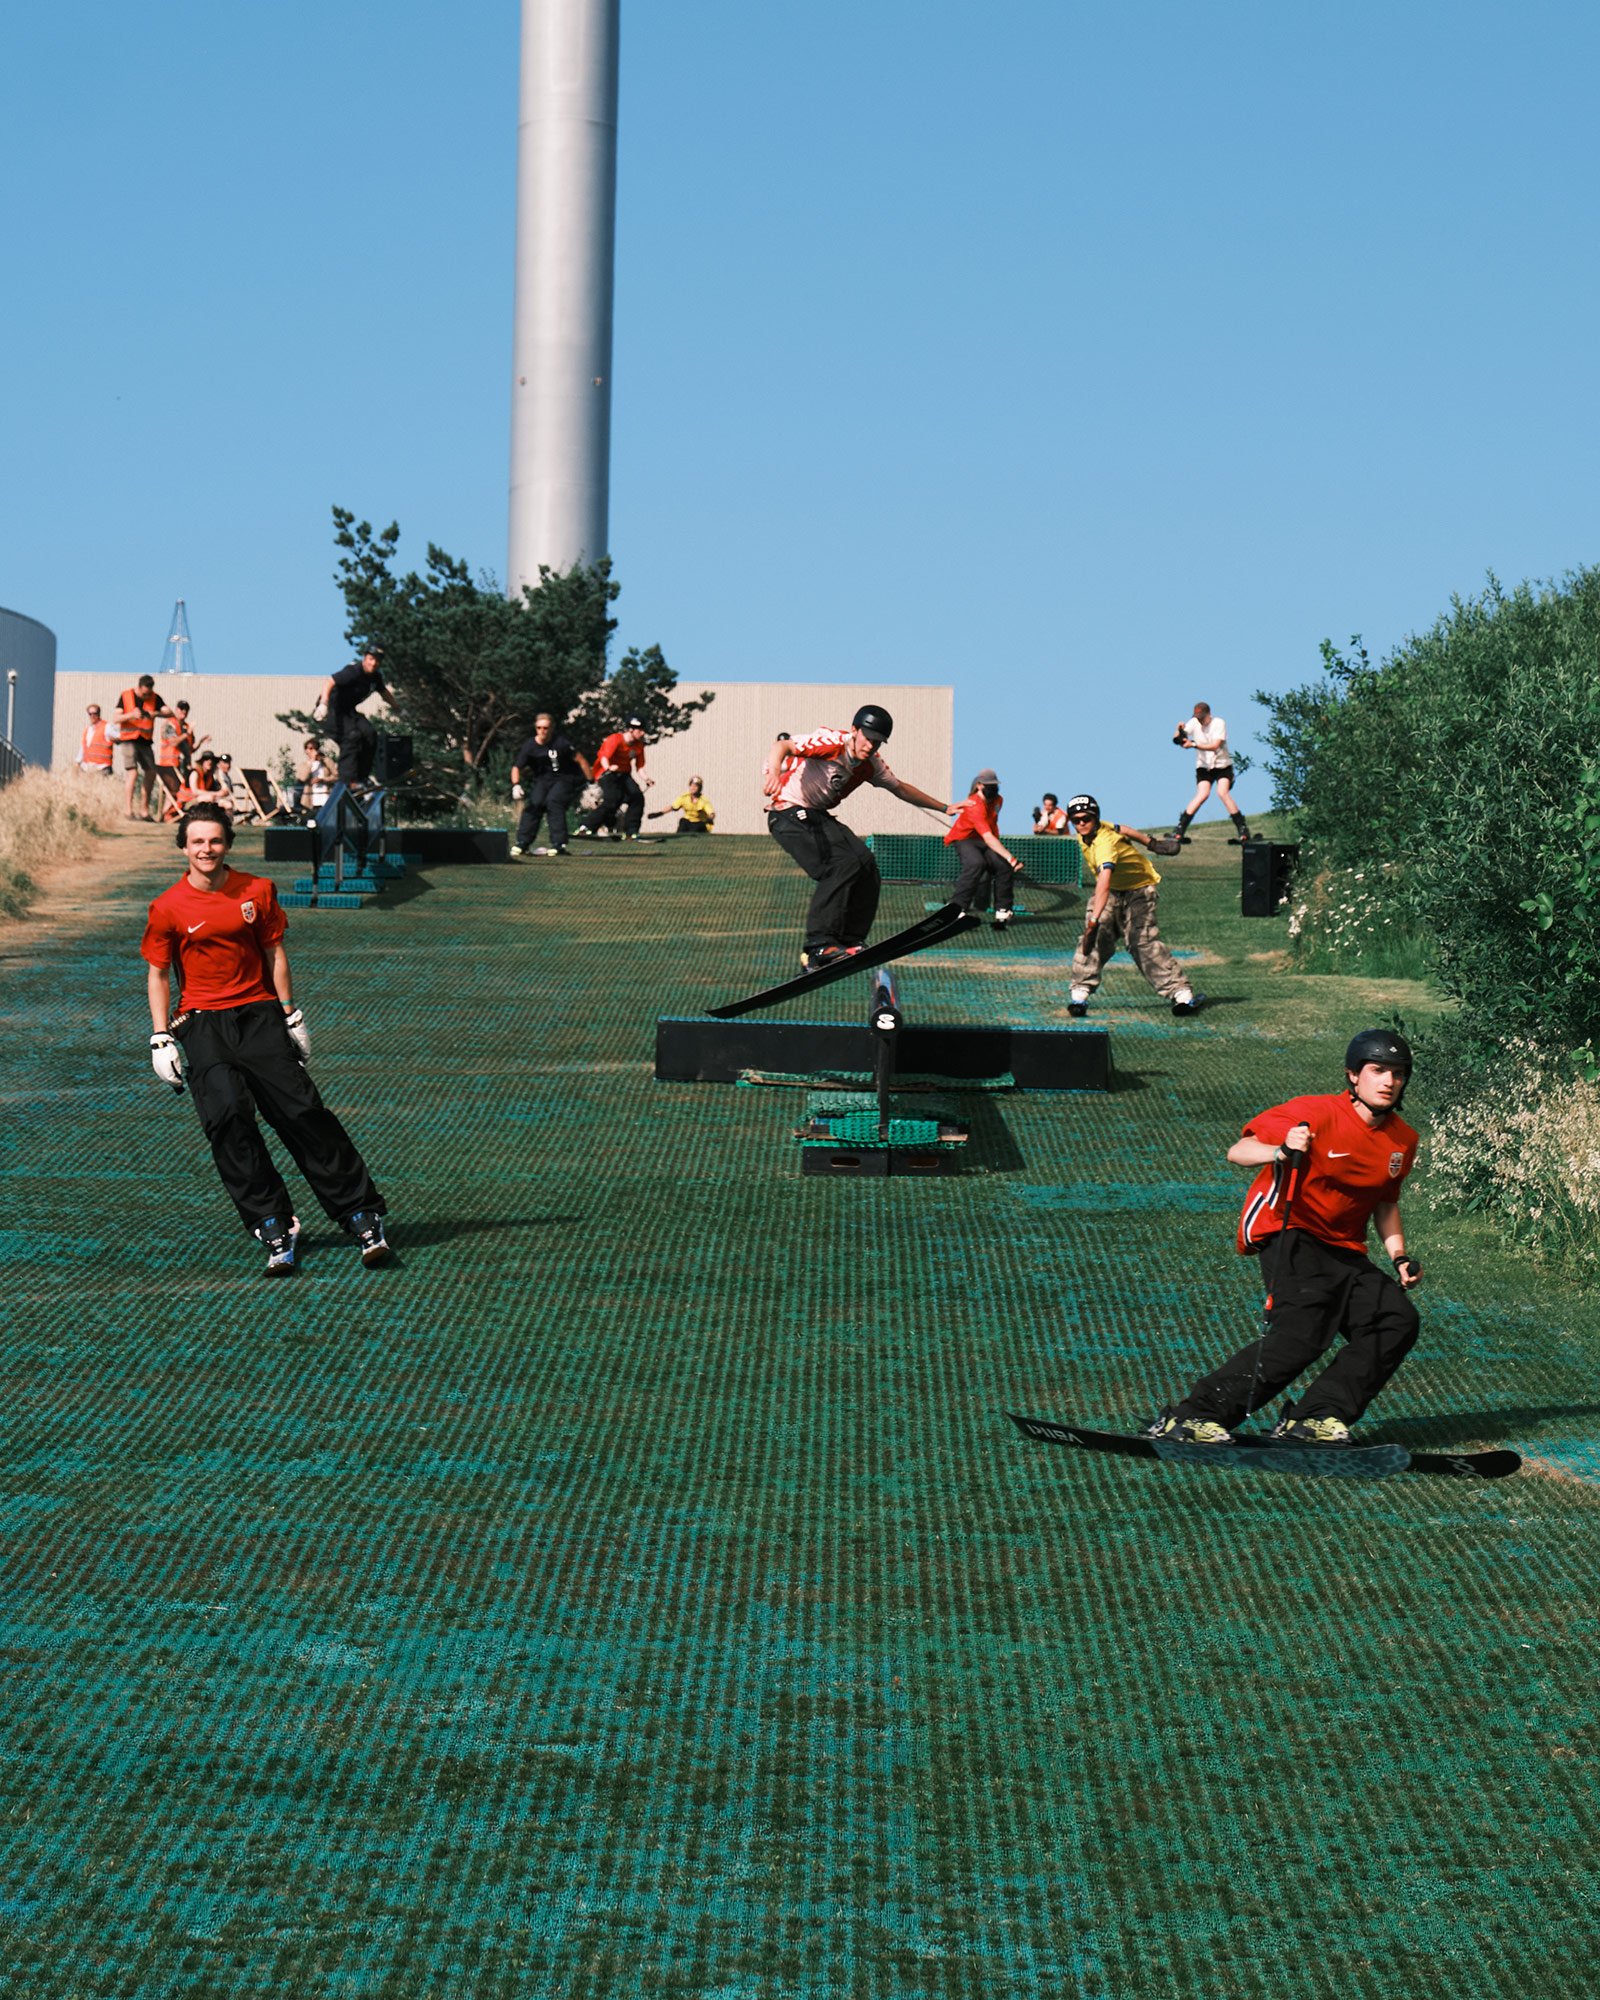 Scandinavian Team Battle at CopenHill dry slope, Copenhagen, Denmark